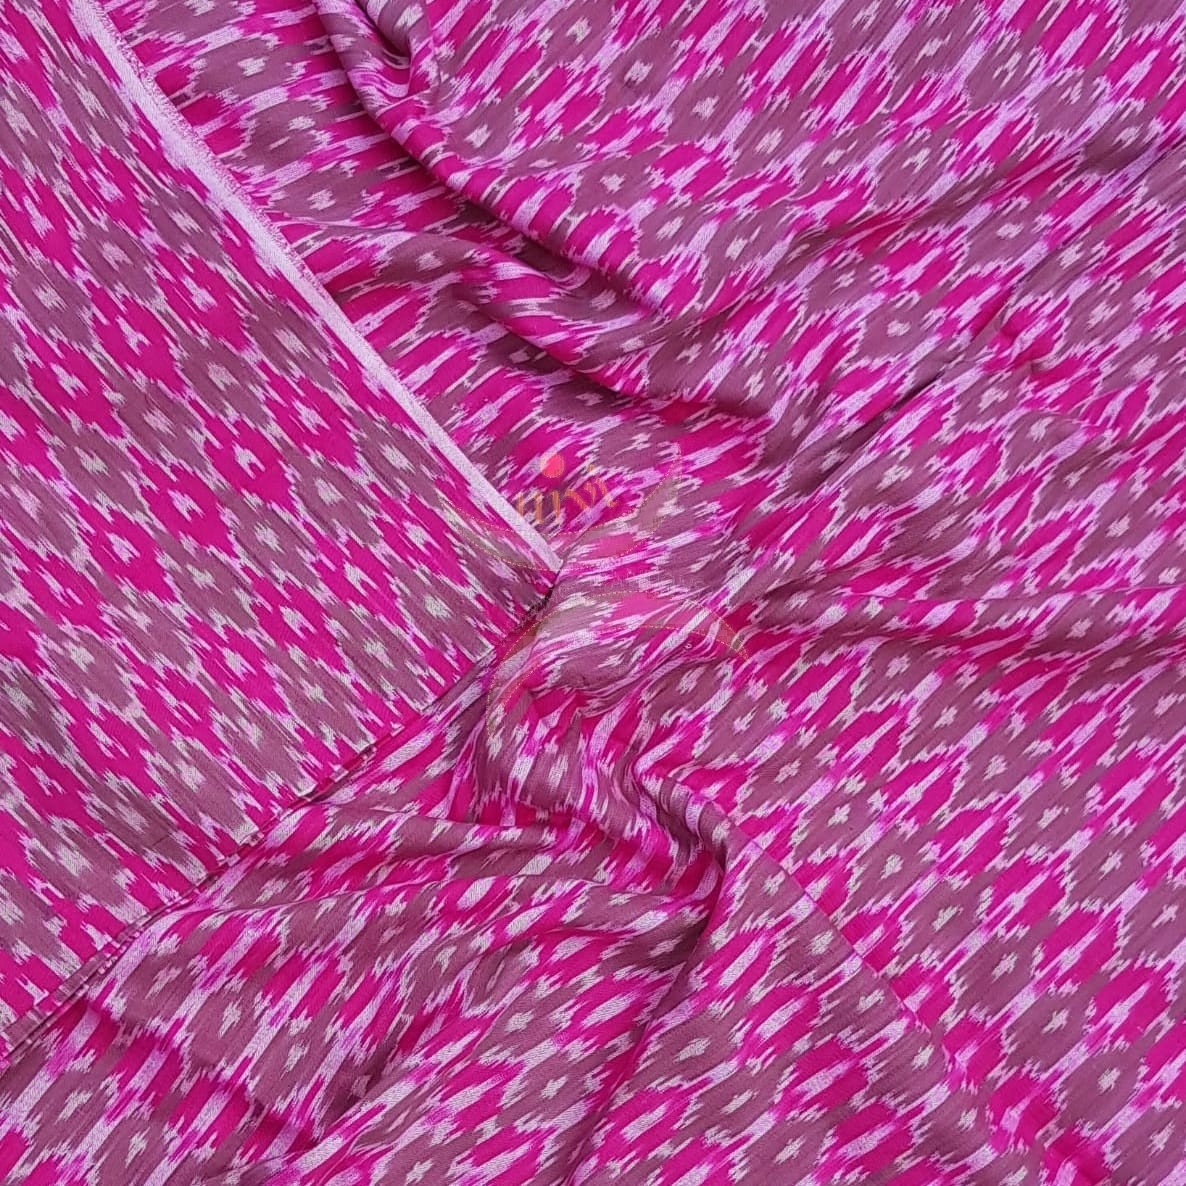 Handloom pink pochampalli ikat cotton fabric